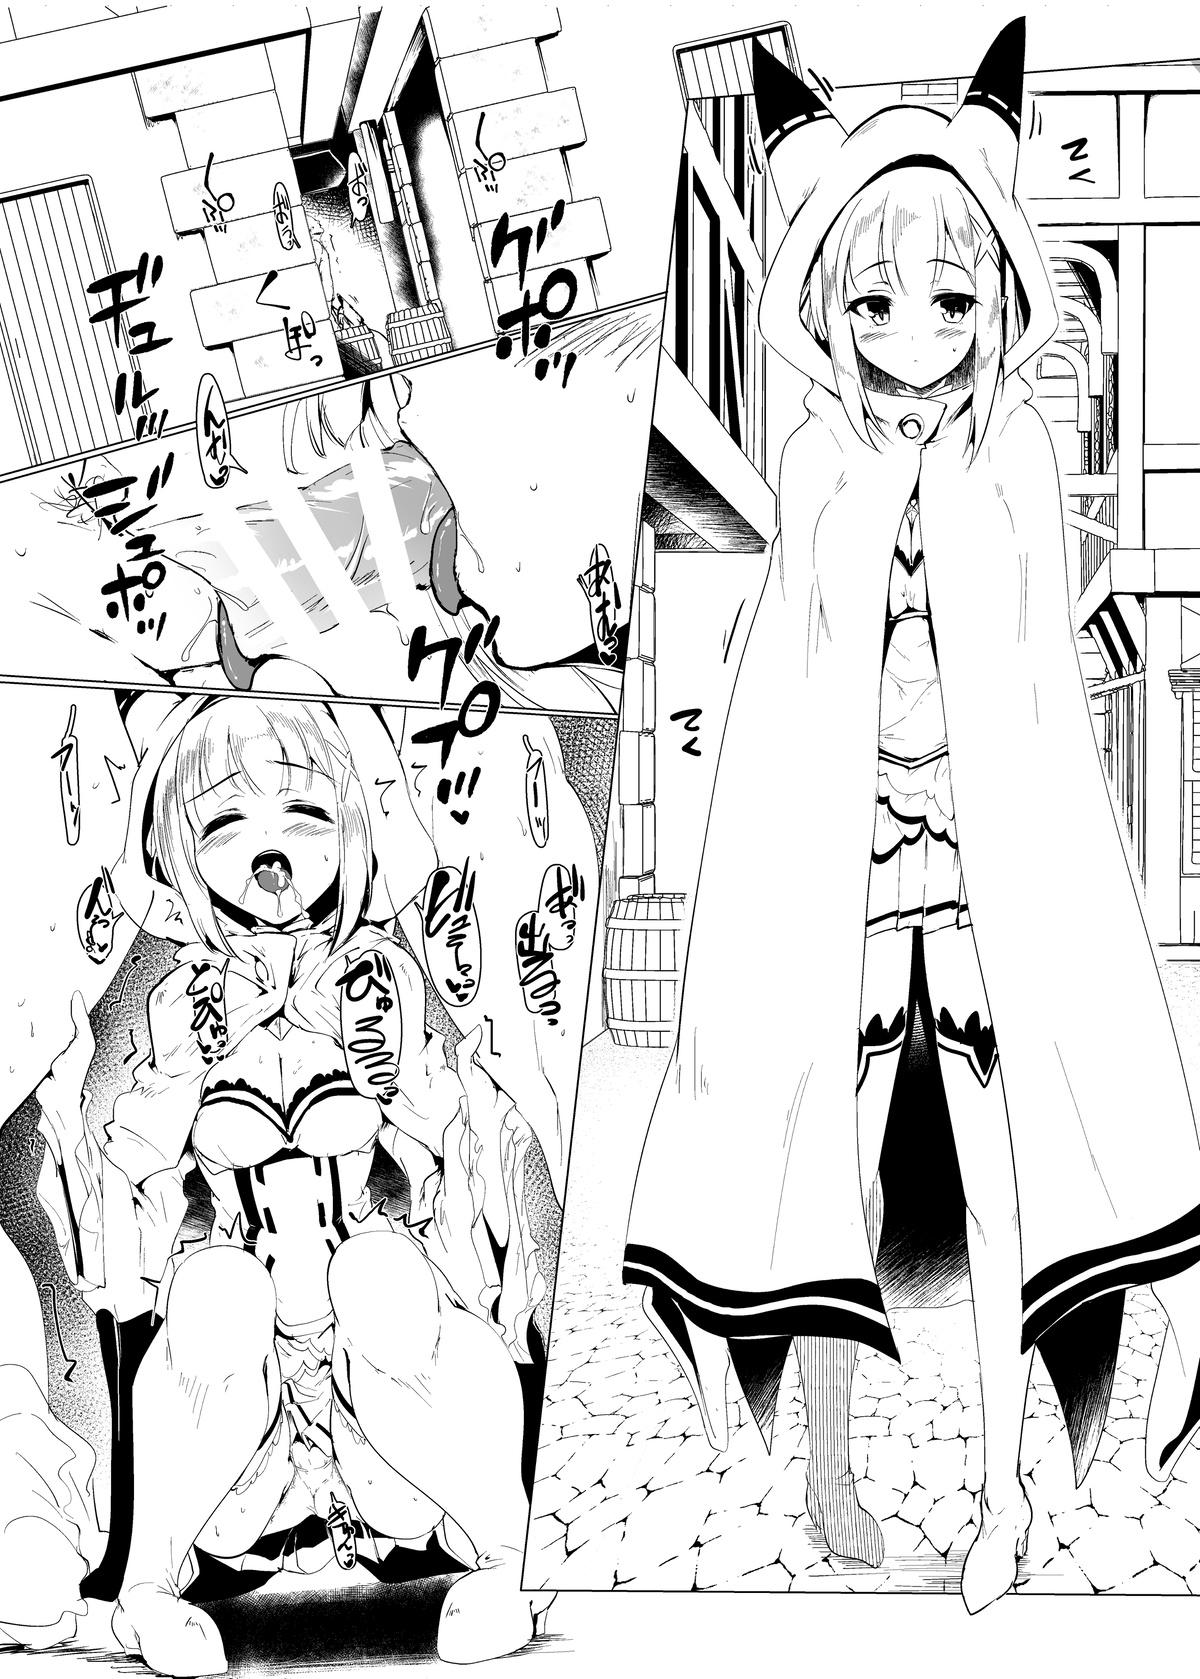 Public Re: Zero kara Hajimeru PachiSlot Seikatsu - Re zero kara hajimeru isekai seikatsu Sologirl - Page 21